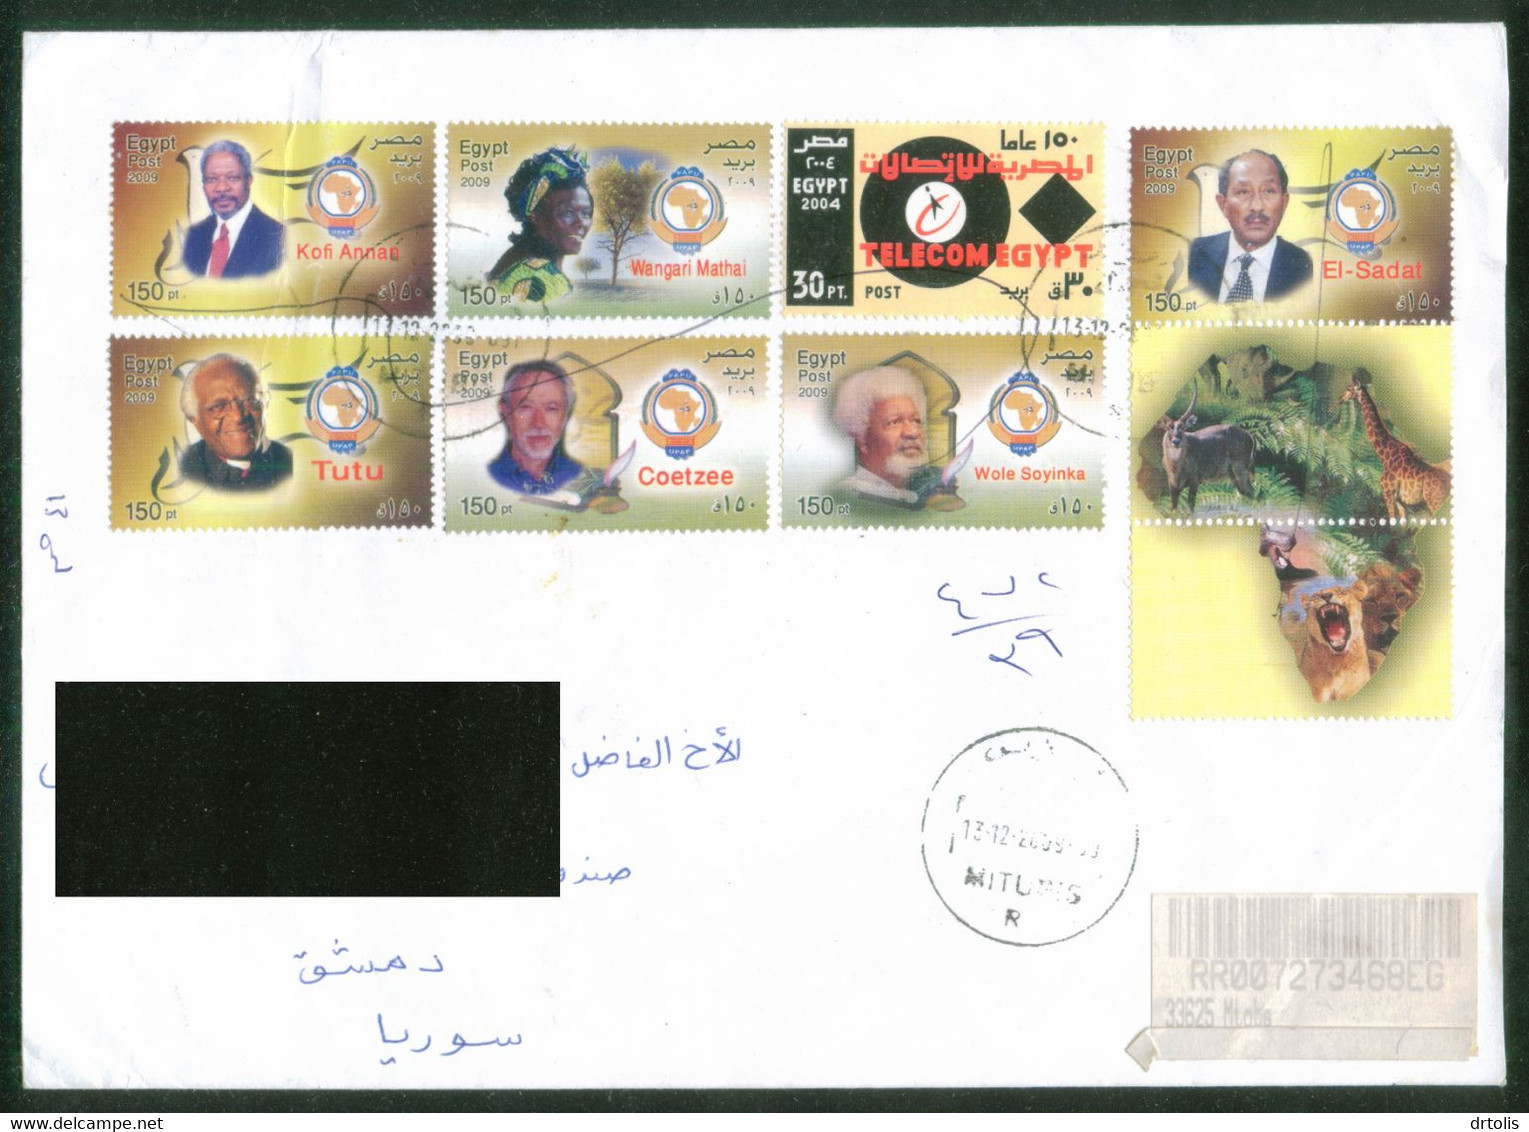 EGYPT / SYRIA / 2004 / THE WITHDRAWN TELECOM STAMP ON COVER TO SYRIA - Storia Postale